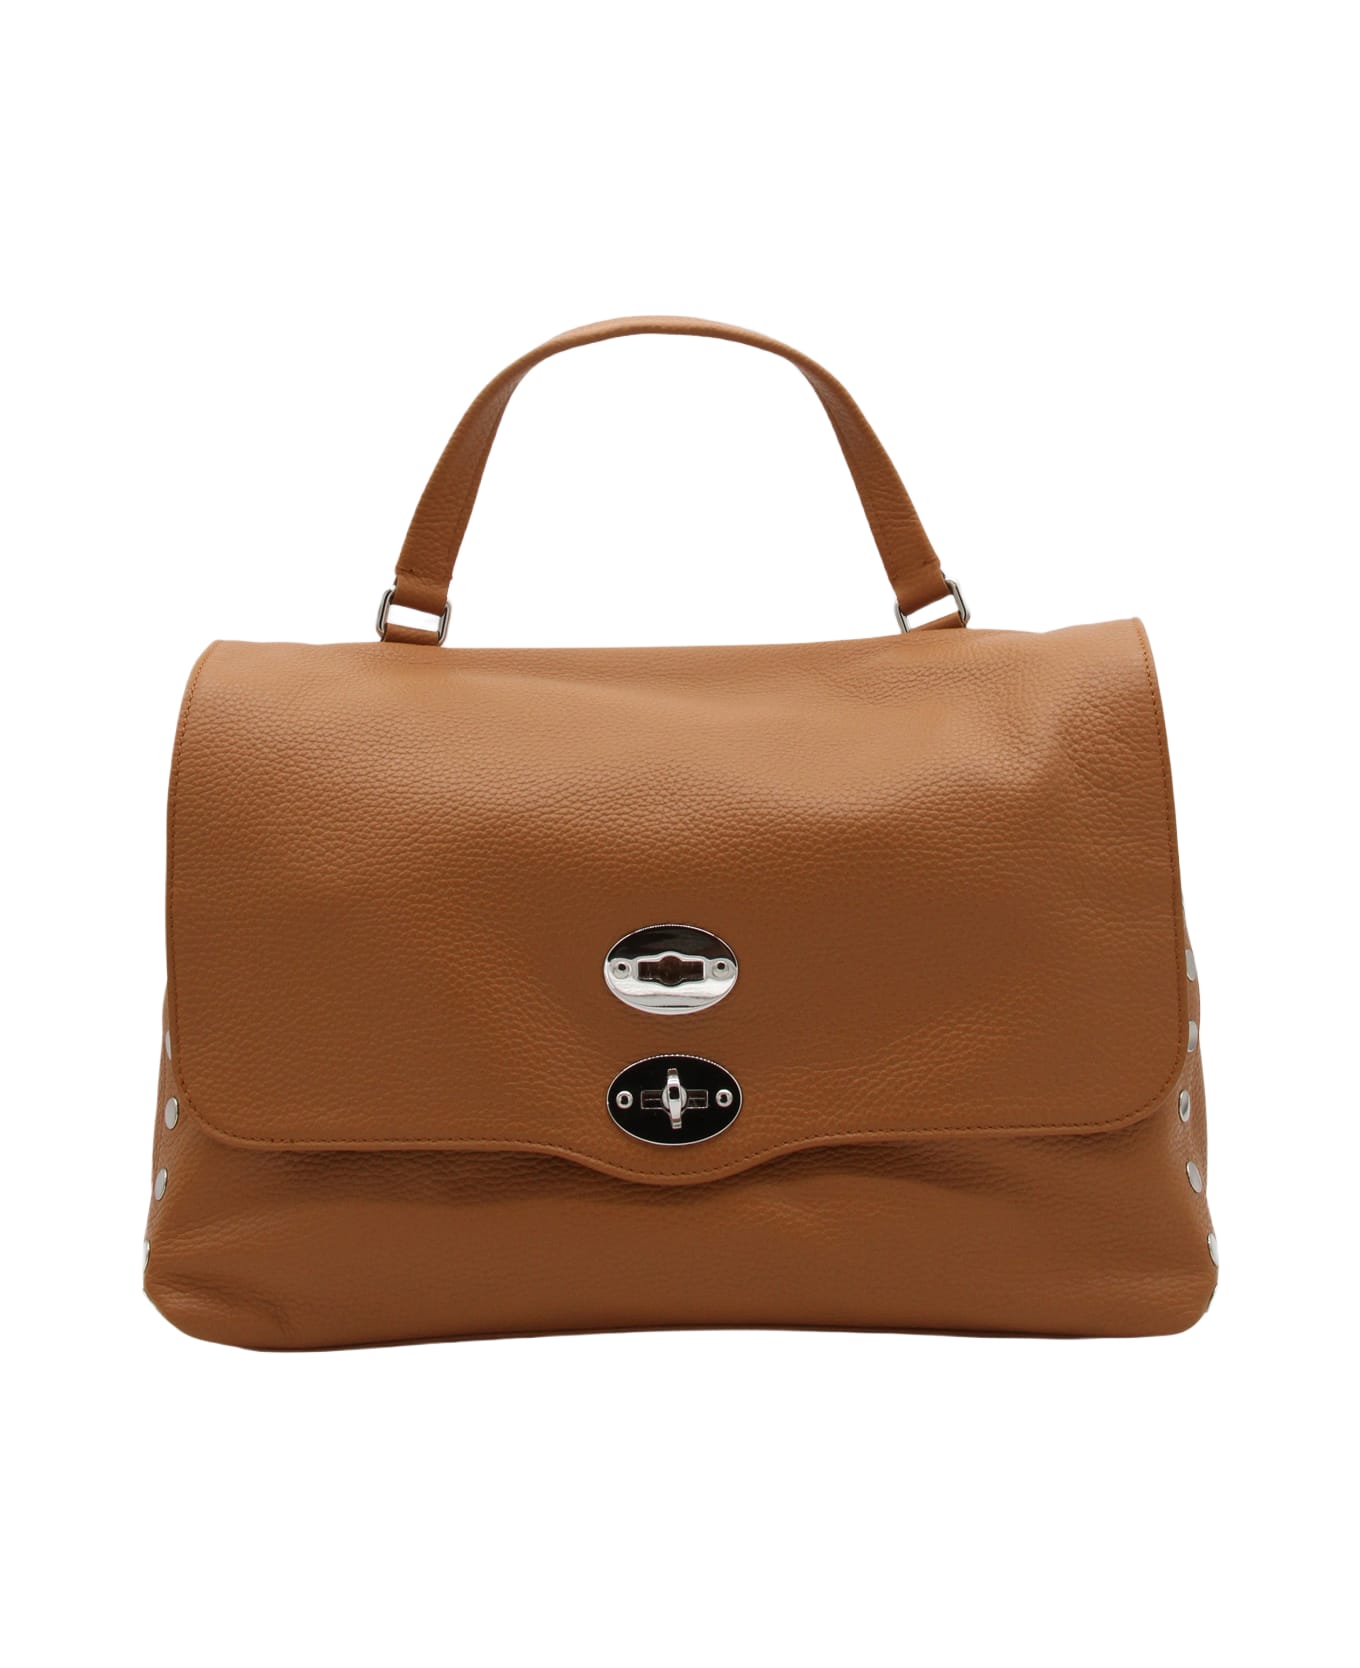 Zanellato Brown Leather Postina S Top Handle Bag - Brown トートバッグ